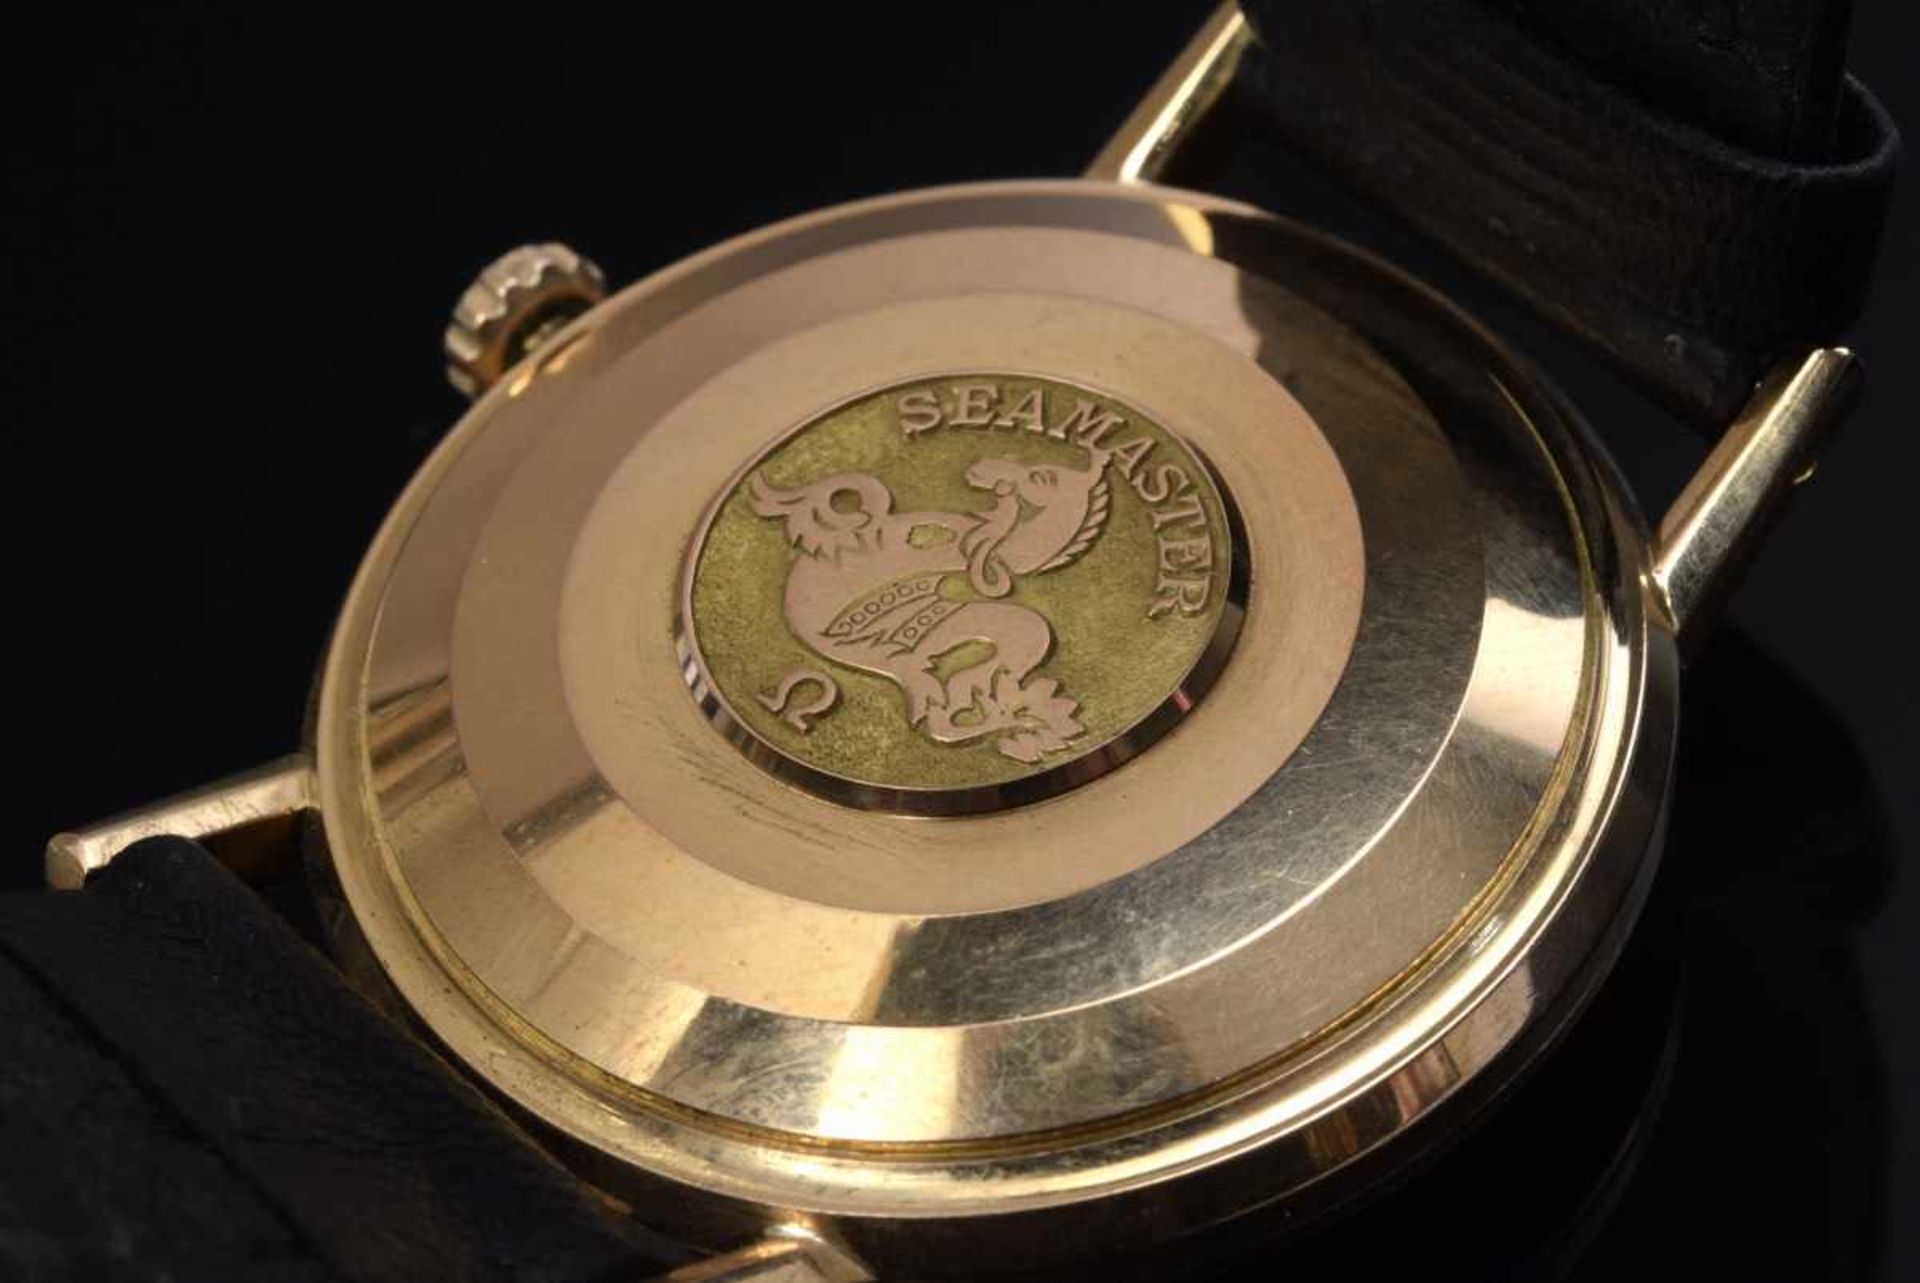 GG 750 Omega "Seamaster de Ville" men's watch, chronograph, automatic, silver-coloured dial with bar - Bild 3 aus 5